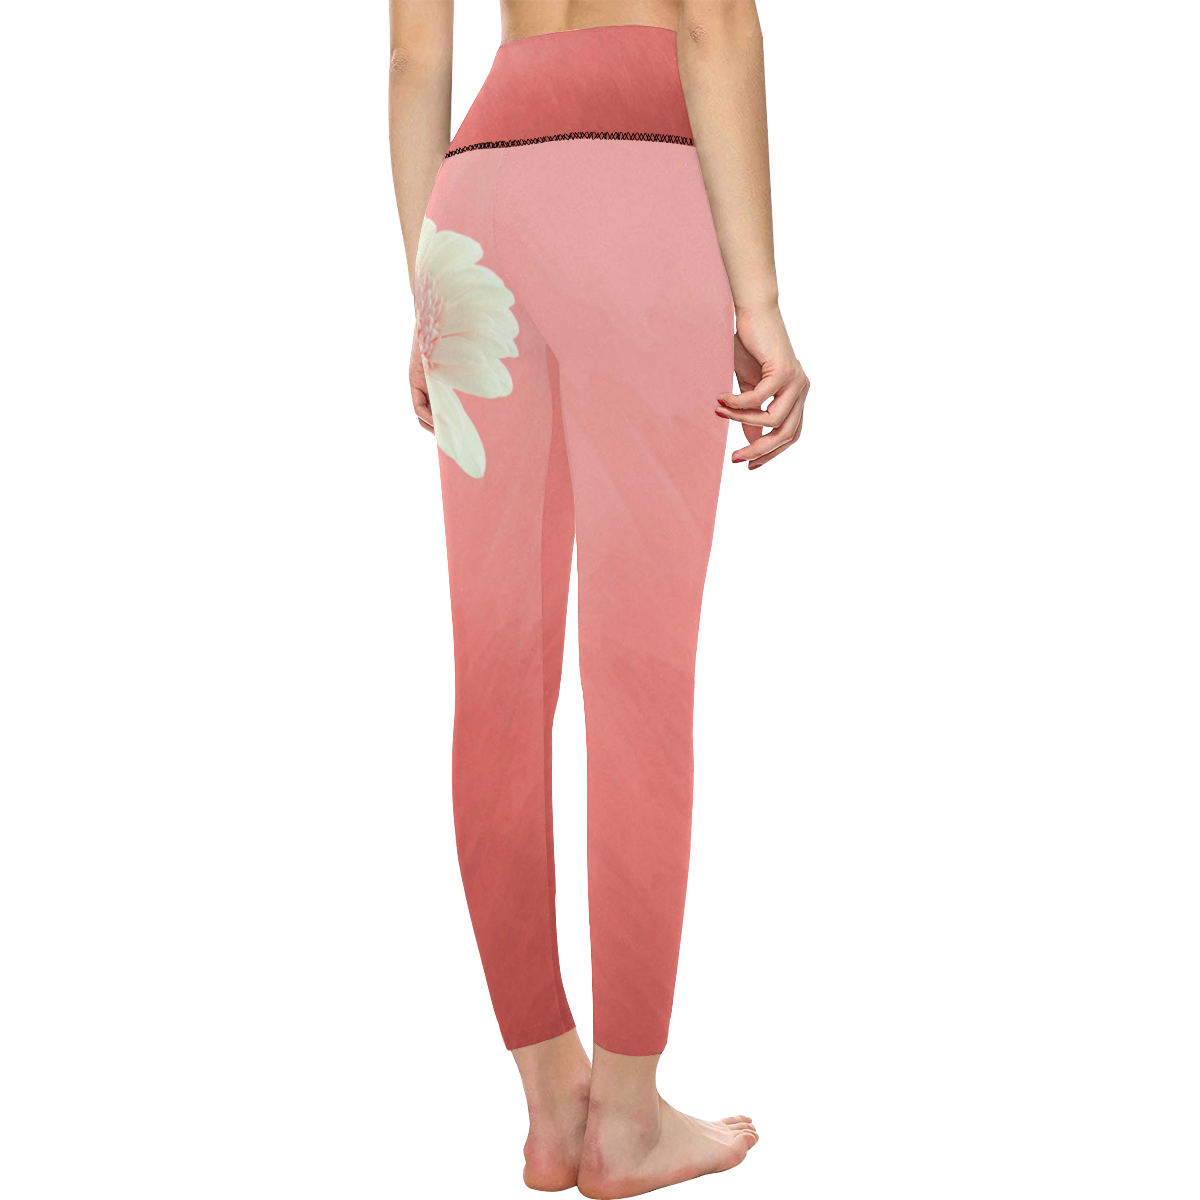 Gerbera Daisy - White Flower on Coral Pink Women's All Over Print High-Waisted Leggings (Model L36)